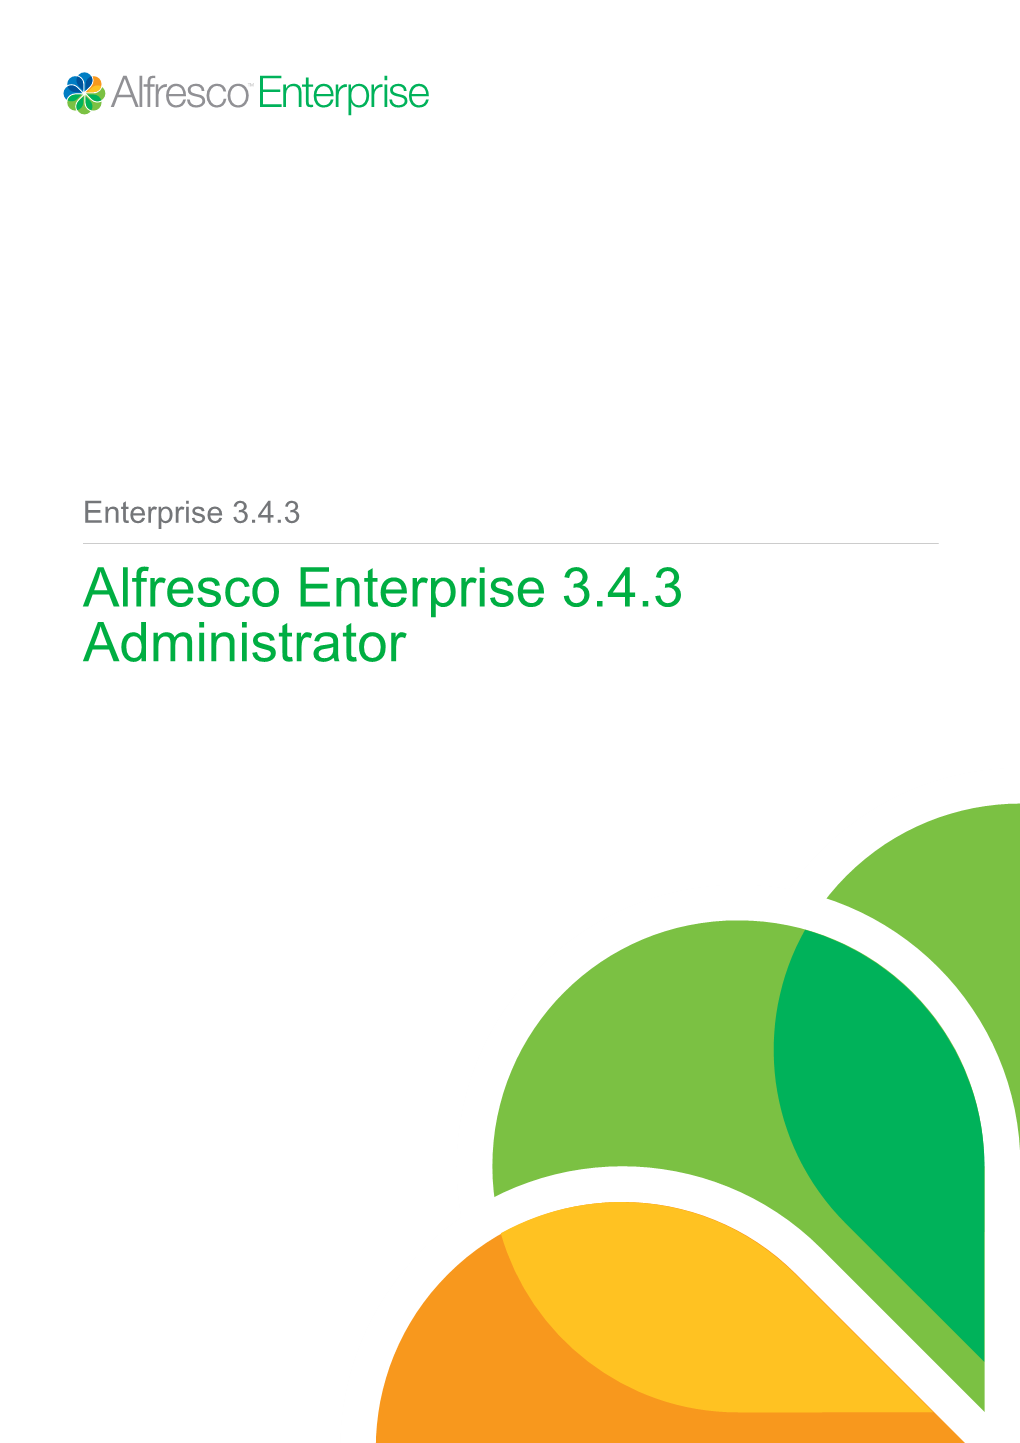 Alfresco Enterprise 3.4.3 Administrator Contents